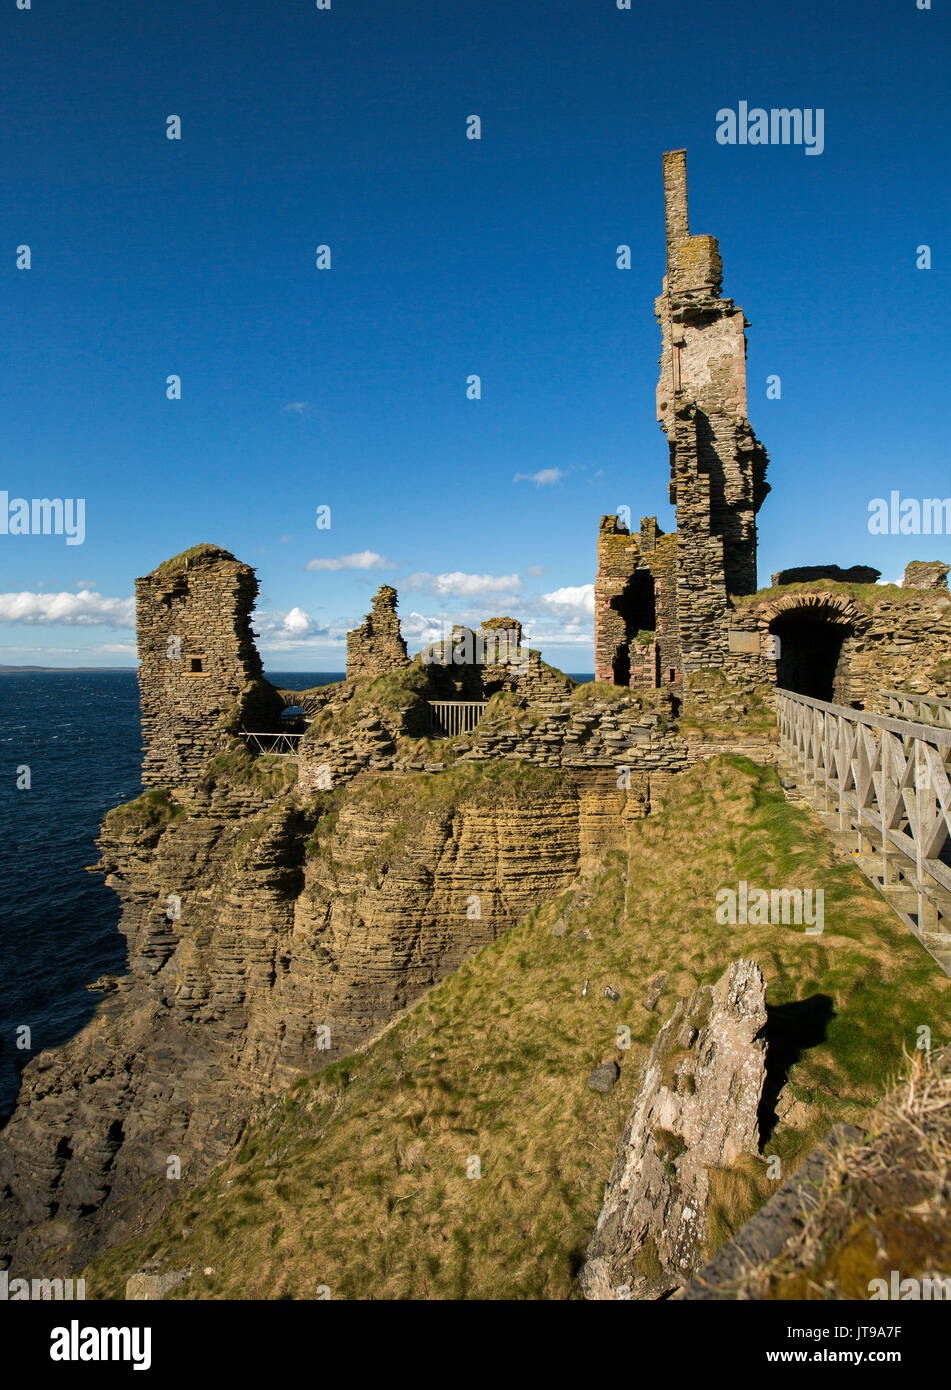 Ruins of Sinclair Girnigoe castle on clifftop with background of blue ocean under blue sky at Noss Head, near Thurso, Scotland Stock Photo